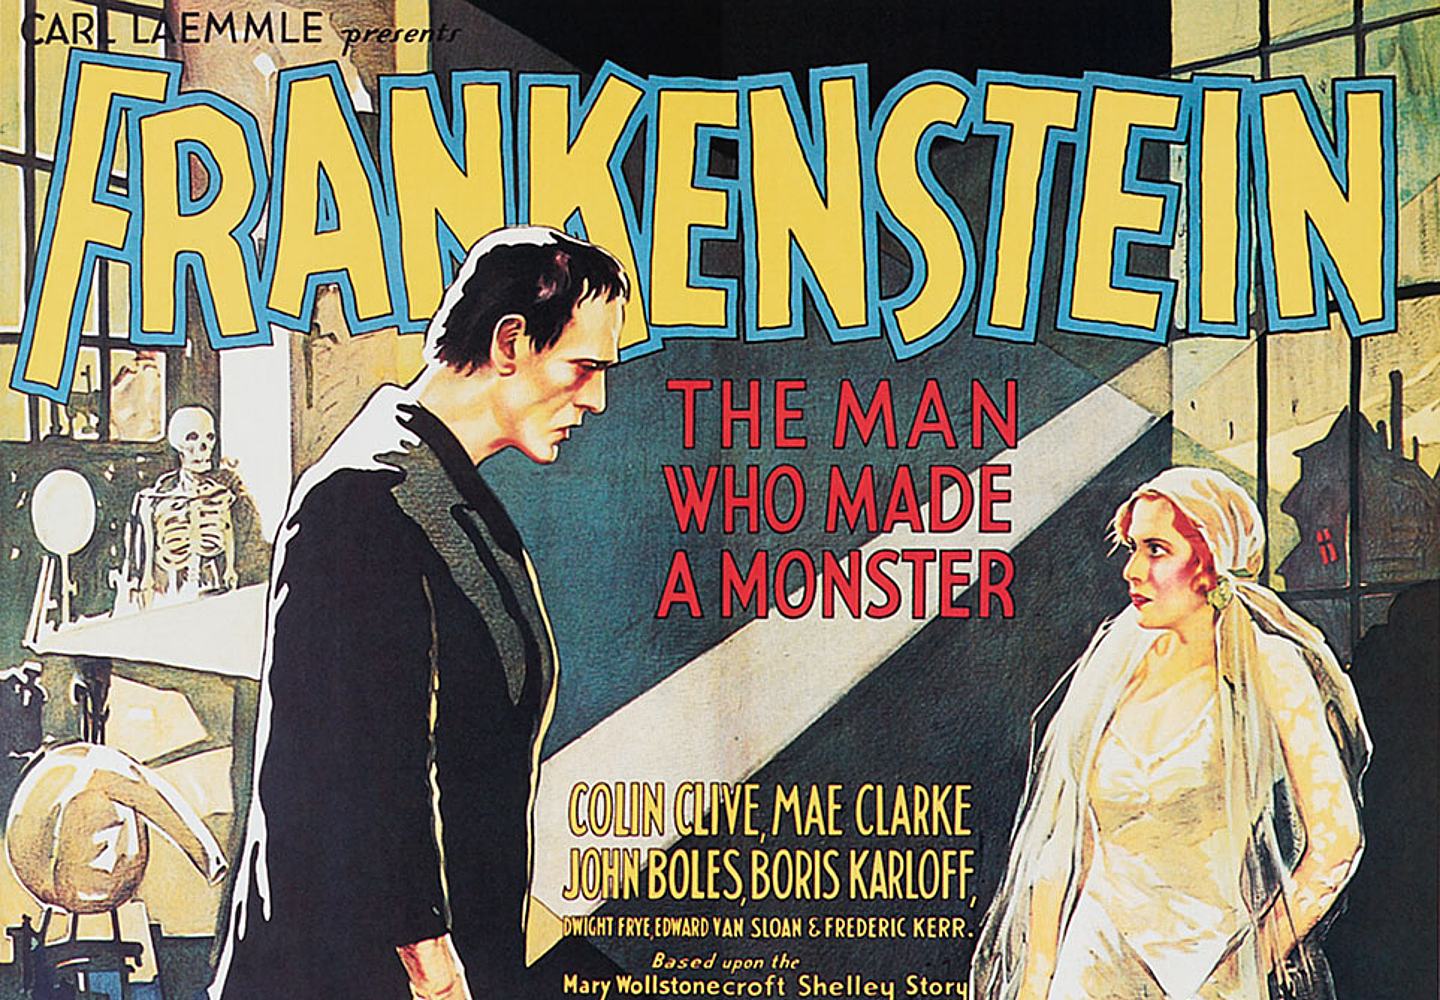 Columbia Night: It’s Alive! Frankenstein at 200